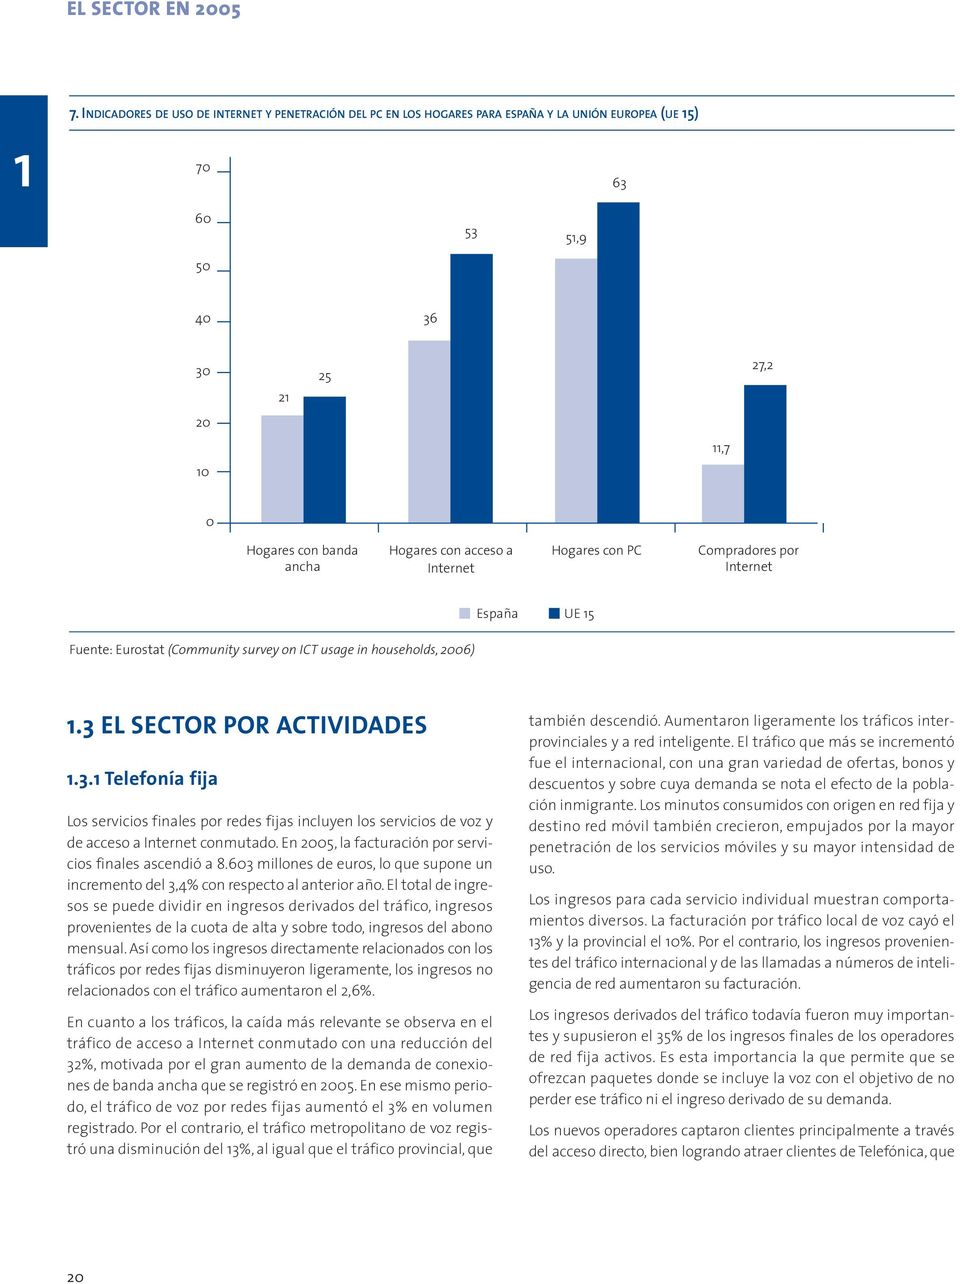 acceso a Internet Hogares con PC Compradores por Internet Fuente: Eurostat (Community survey on ICT usage in households, 2006) España UE 15 1.3 